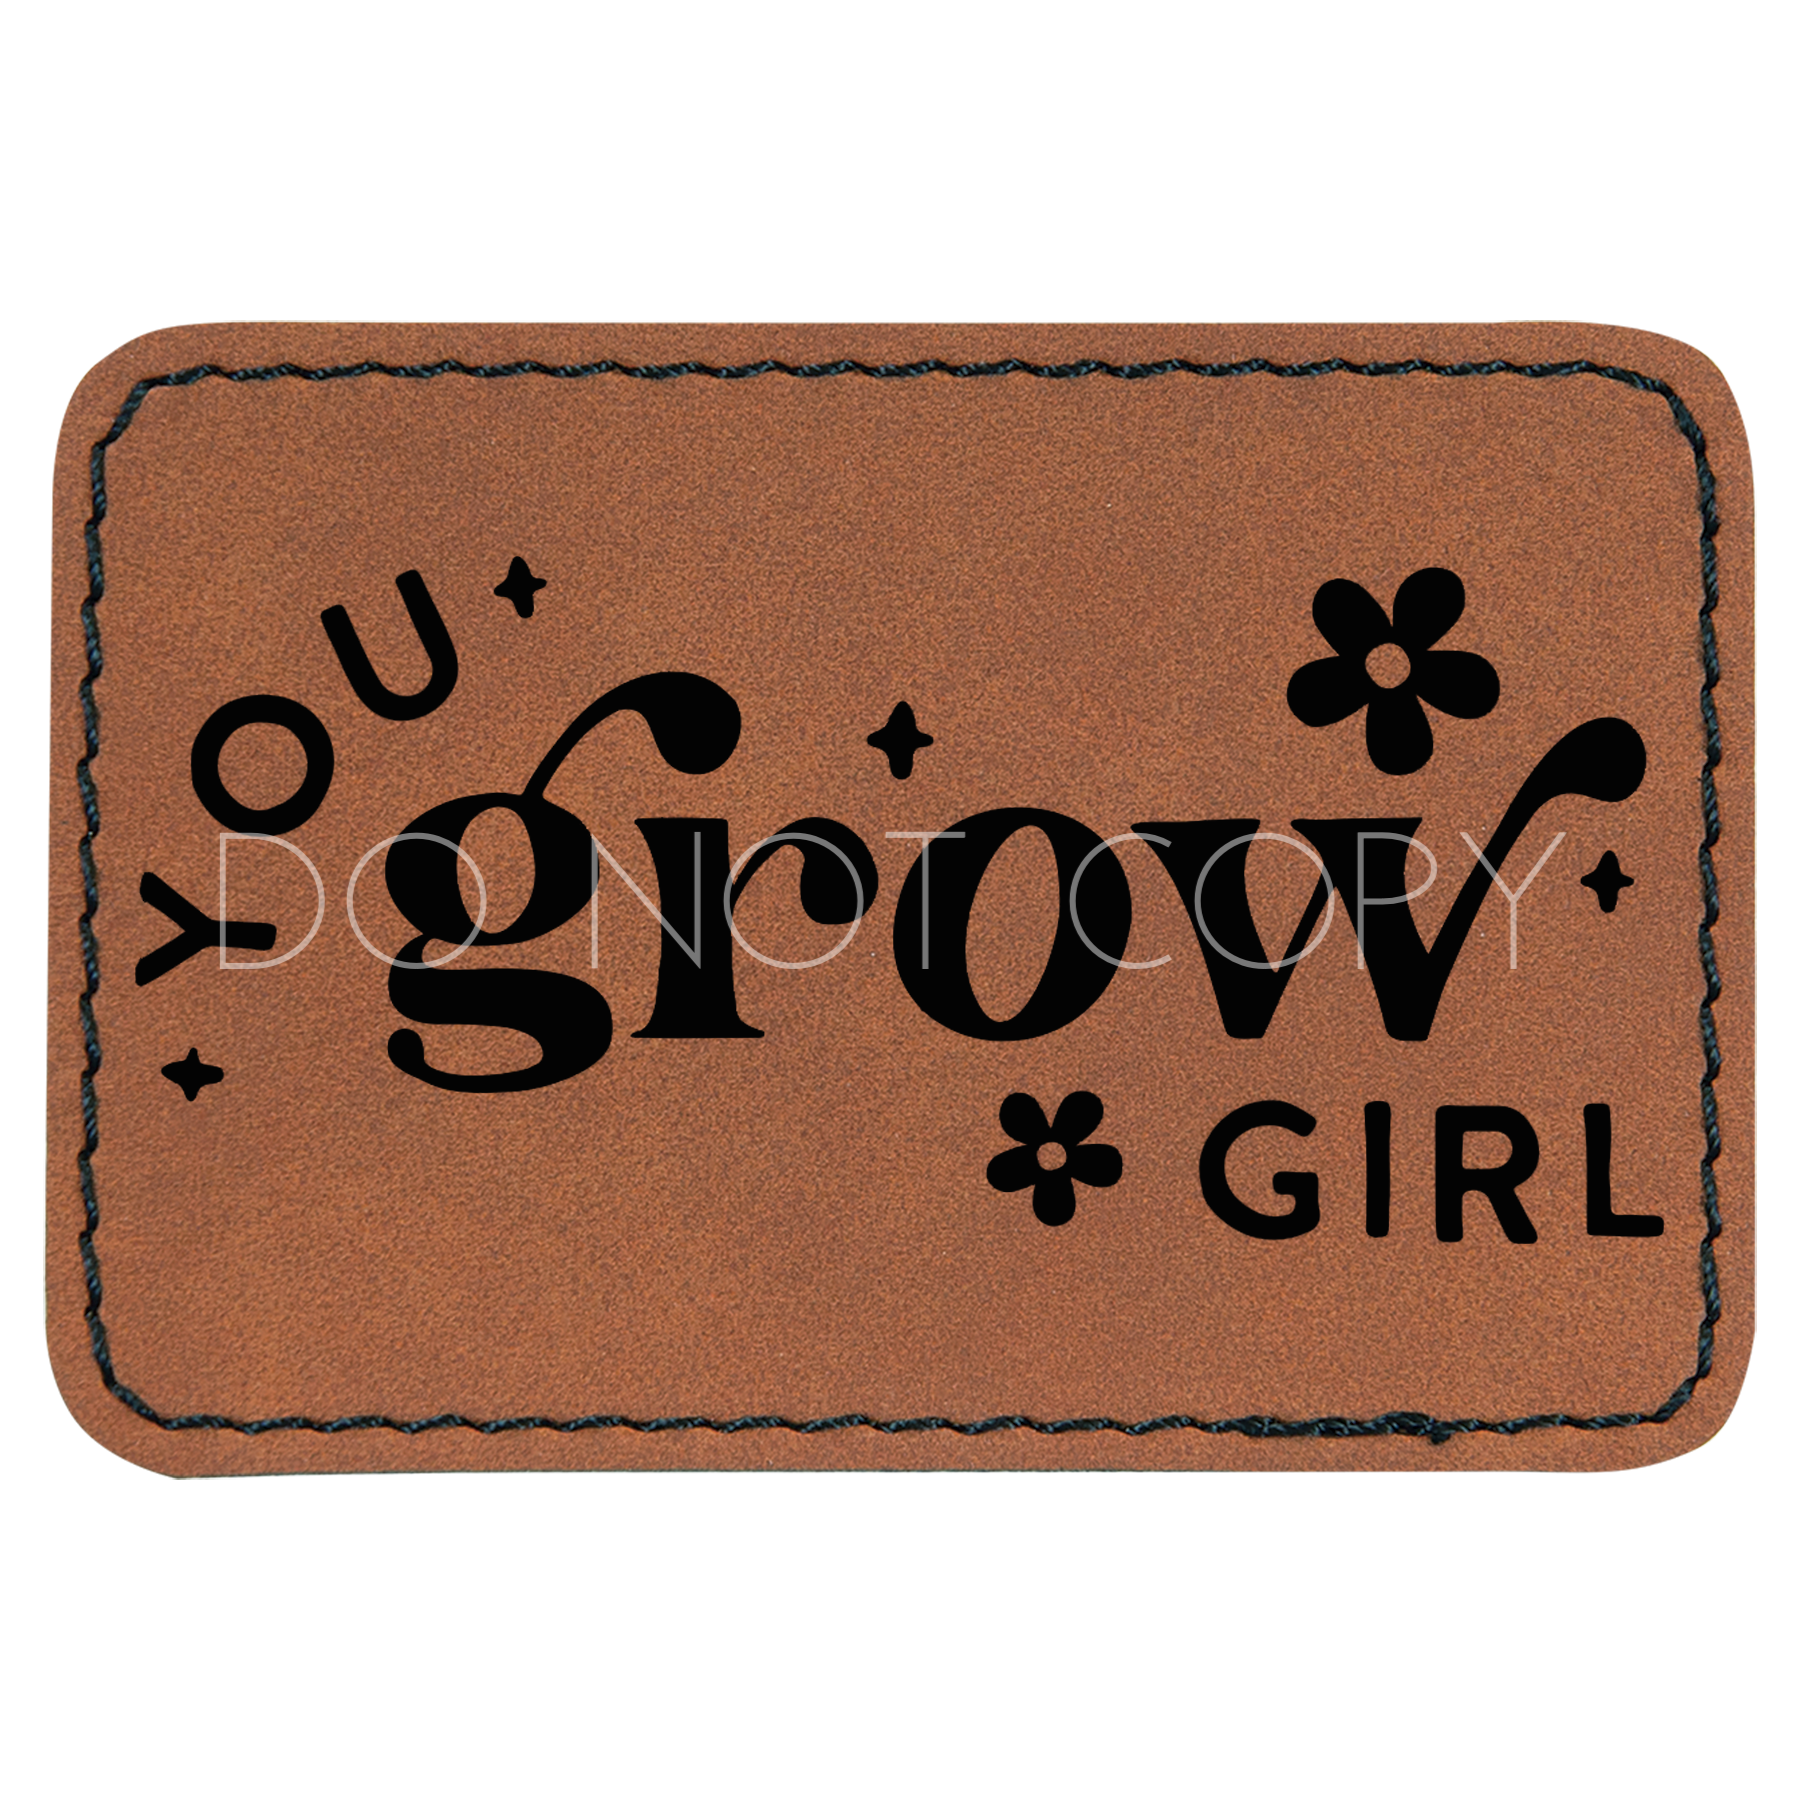 You Grow Girl Patch